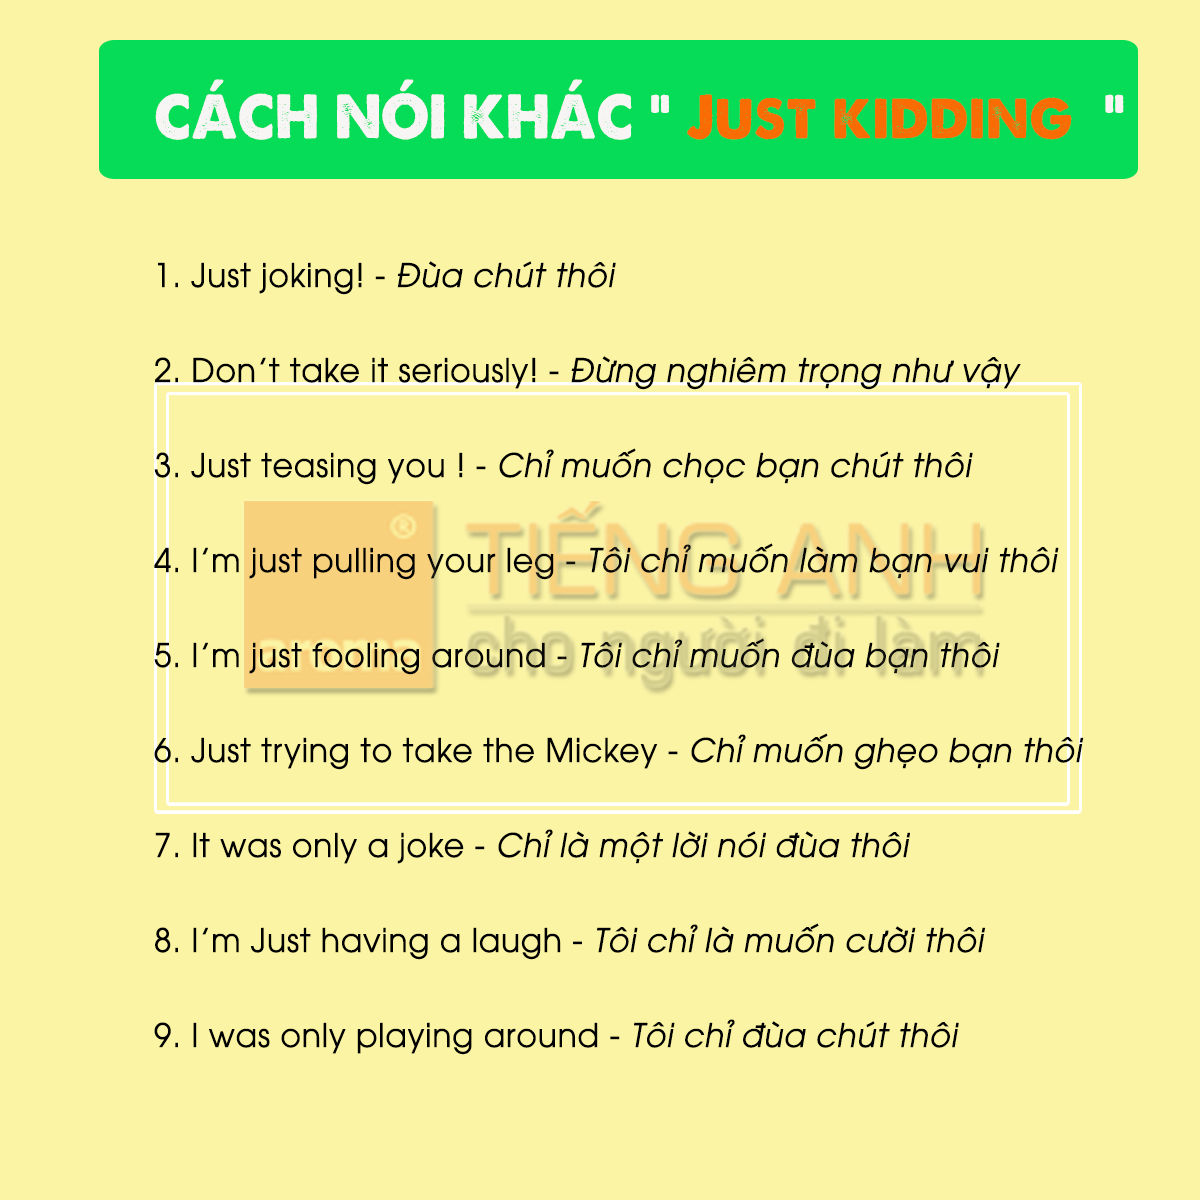 cach-noi-khac-just-kidding